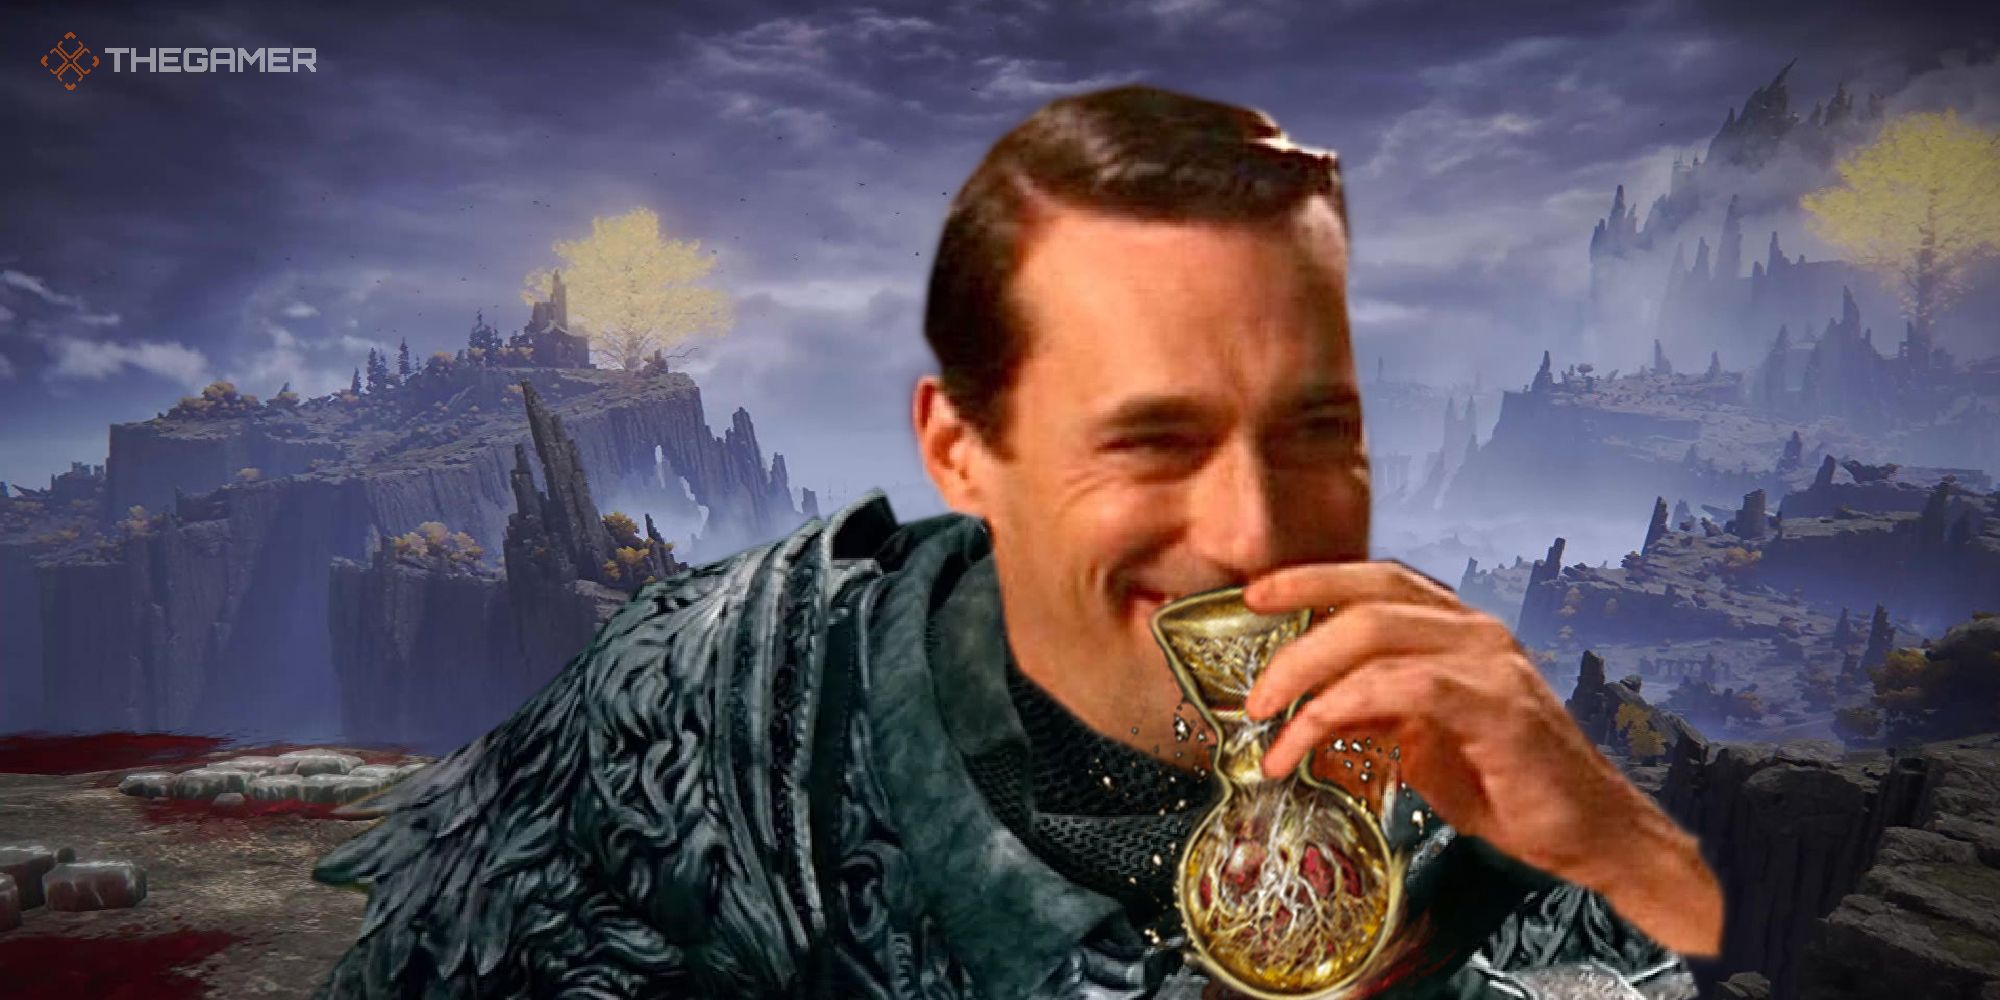 Elden Ring Flask Meme - jon hamm - i think - drinking from a fancy goblet in front of an elden ring landscape